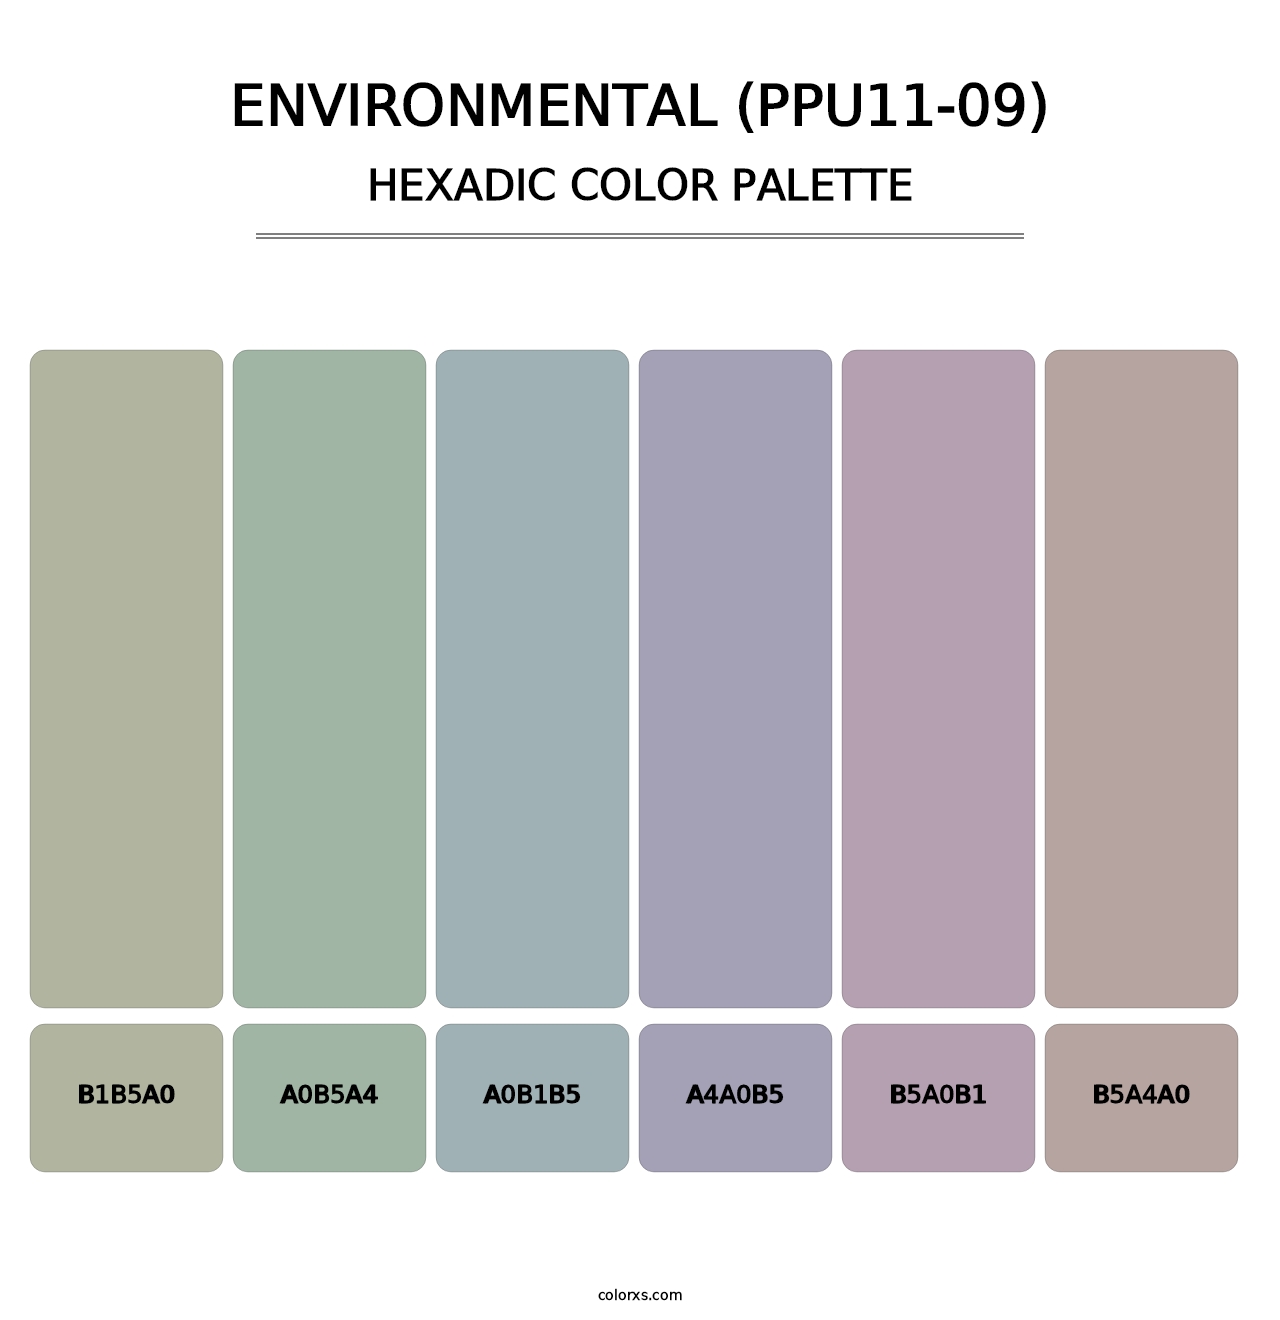 Environmental (PPU11-09) - Hexadic Color Palette